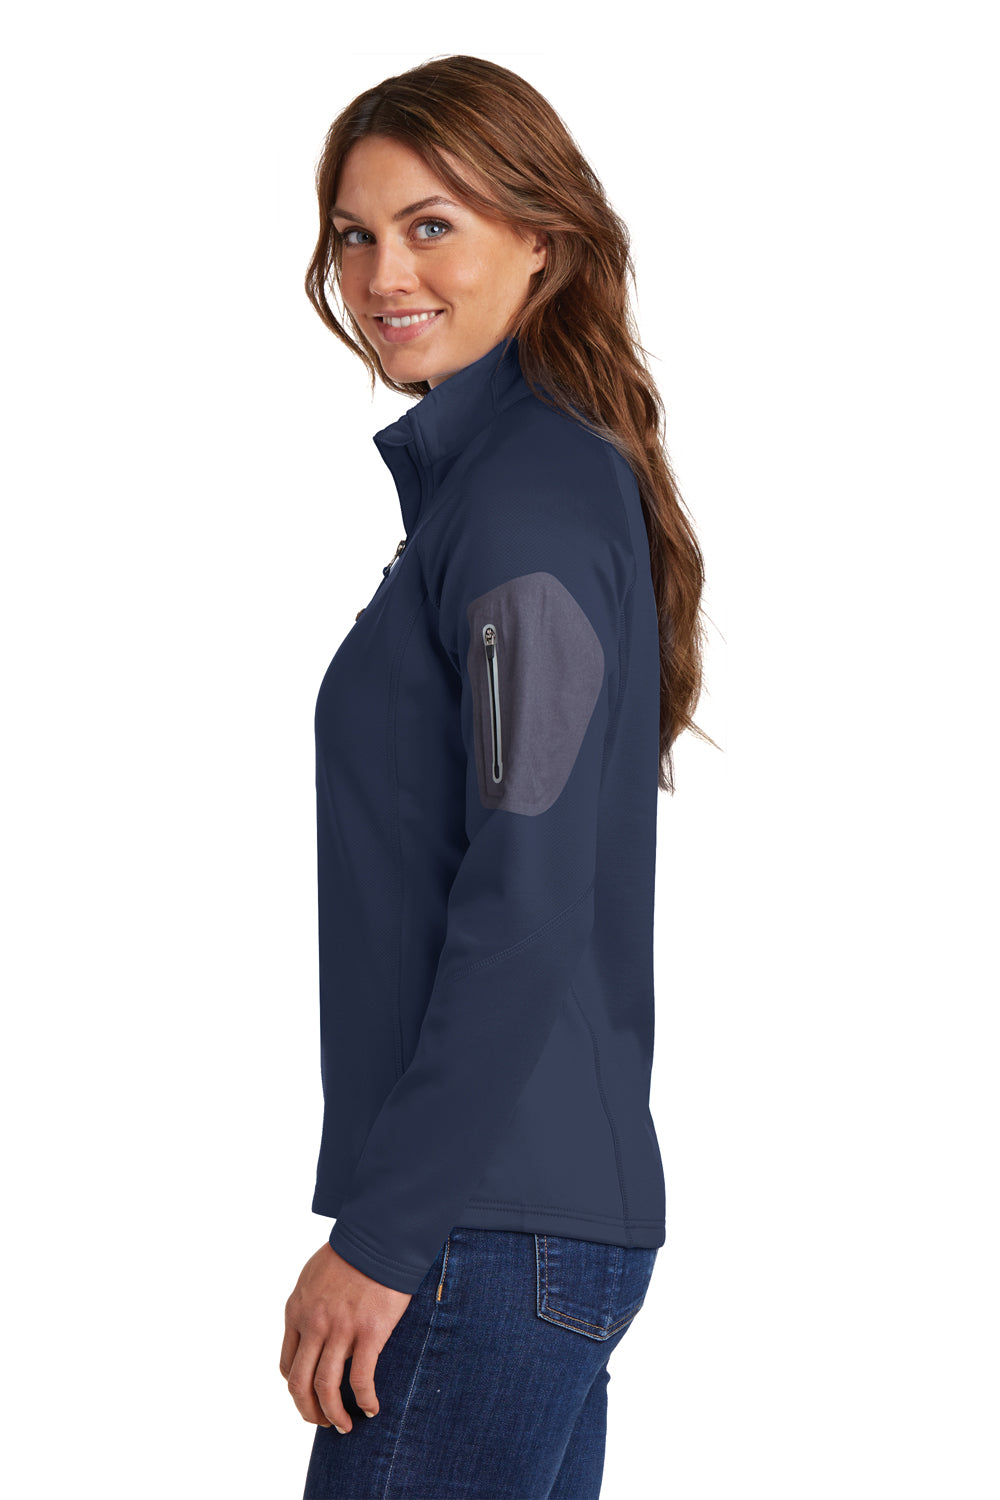 Eddie Bauer EB235 Womens Performance Fleece 1/4 Zip Sweatshirt River Navy Blue Model Side